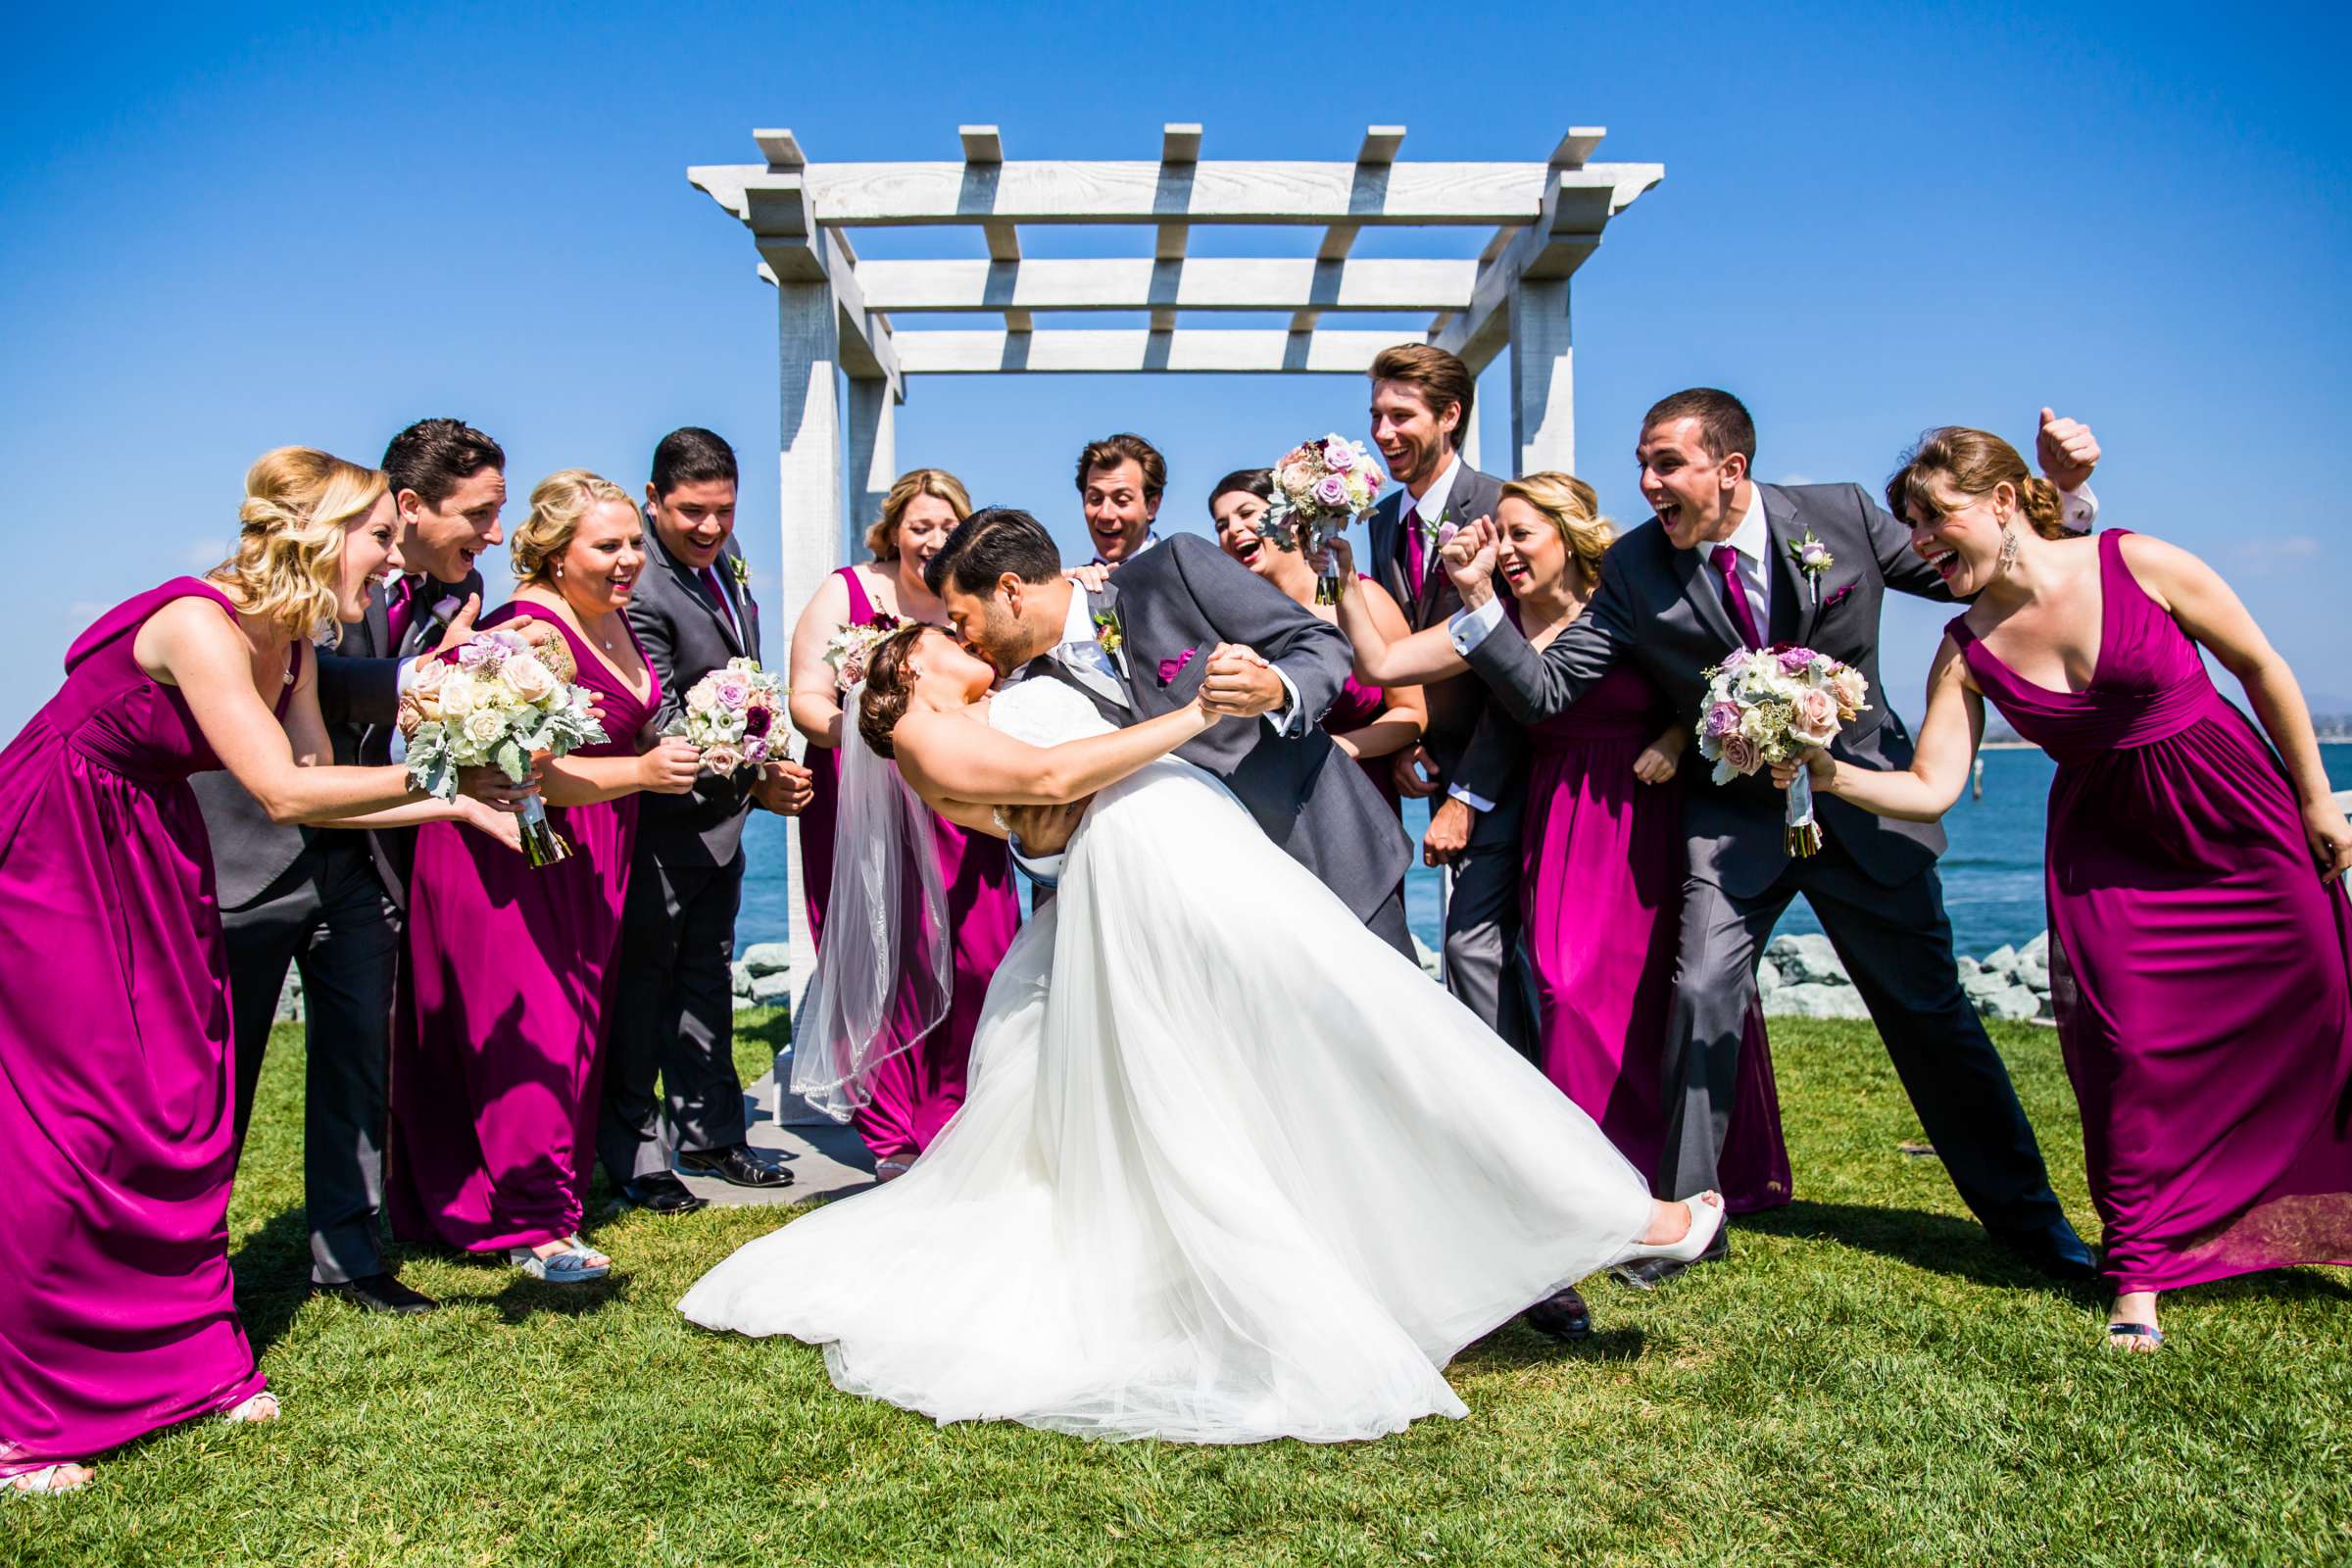 Loews Coronado Bay Resort Wedding coordinated by Thumbprint Weddings & Events, Lee and Daniel Wedding Photo #5 by True Photography